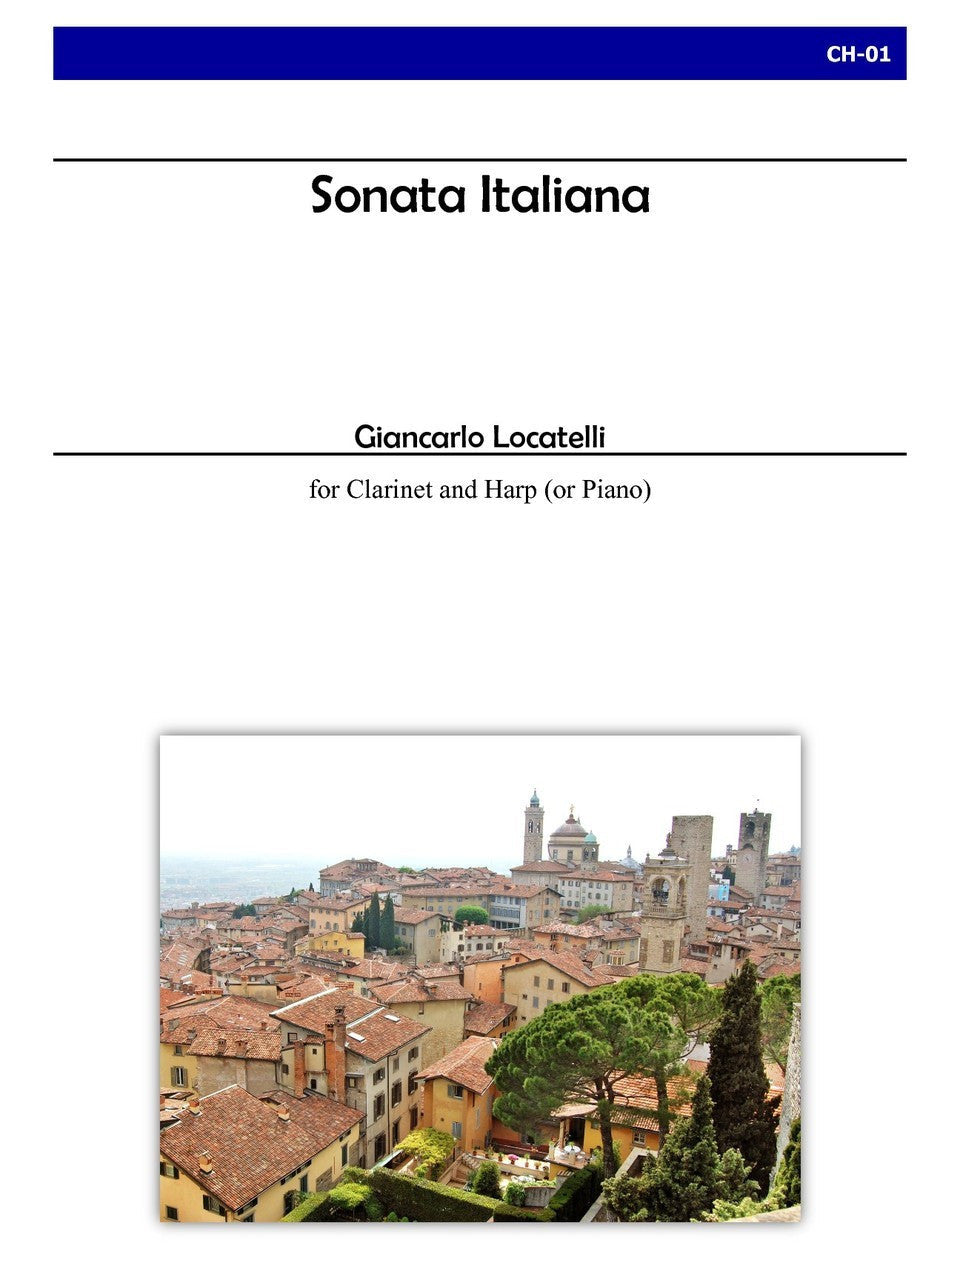 Locatelli - Sonata Italiana for Clarinet and Harp